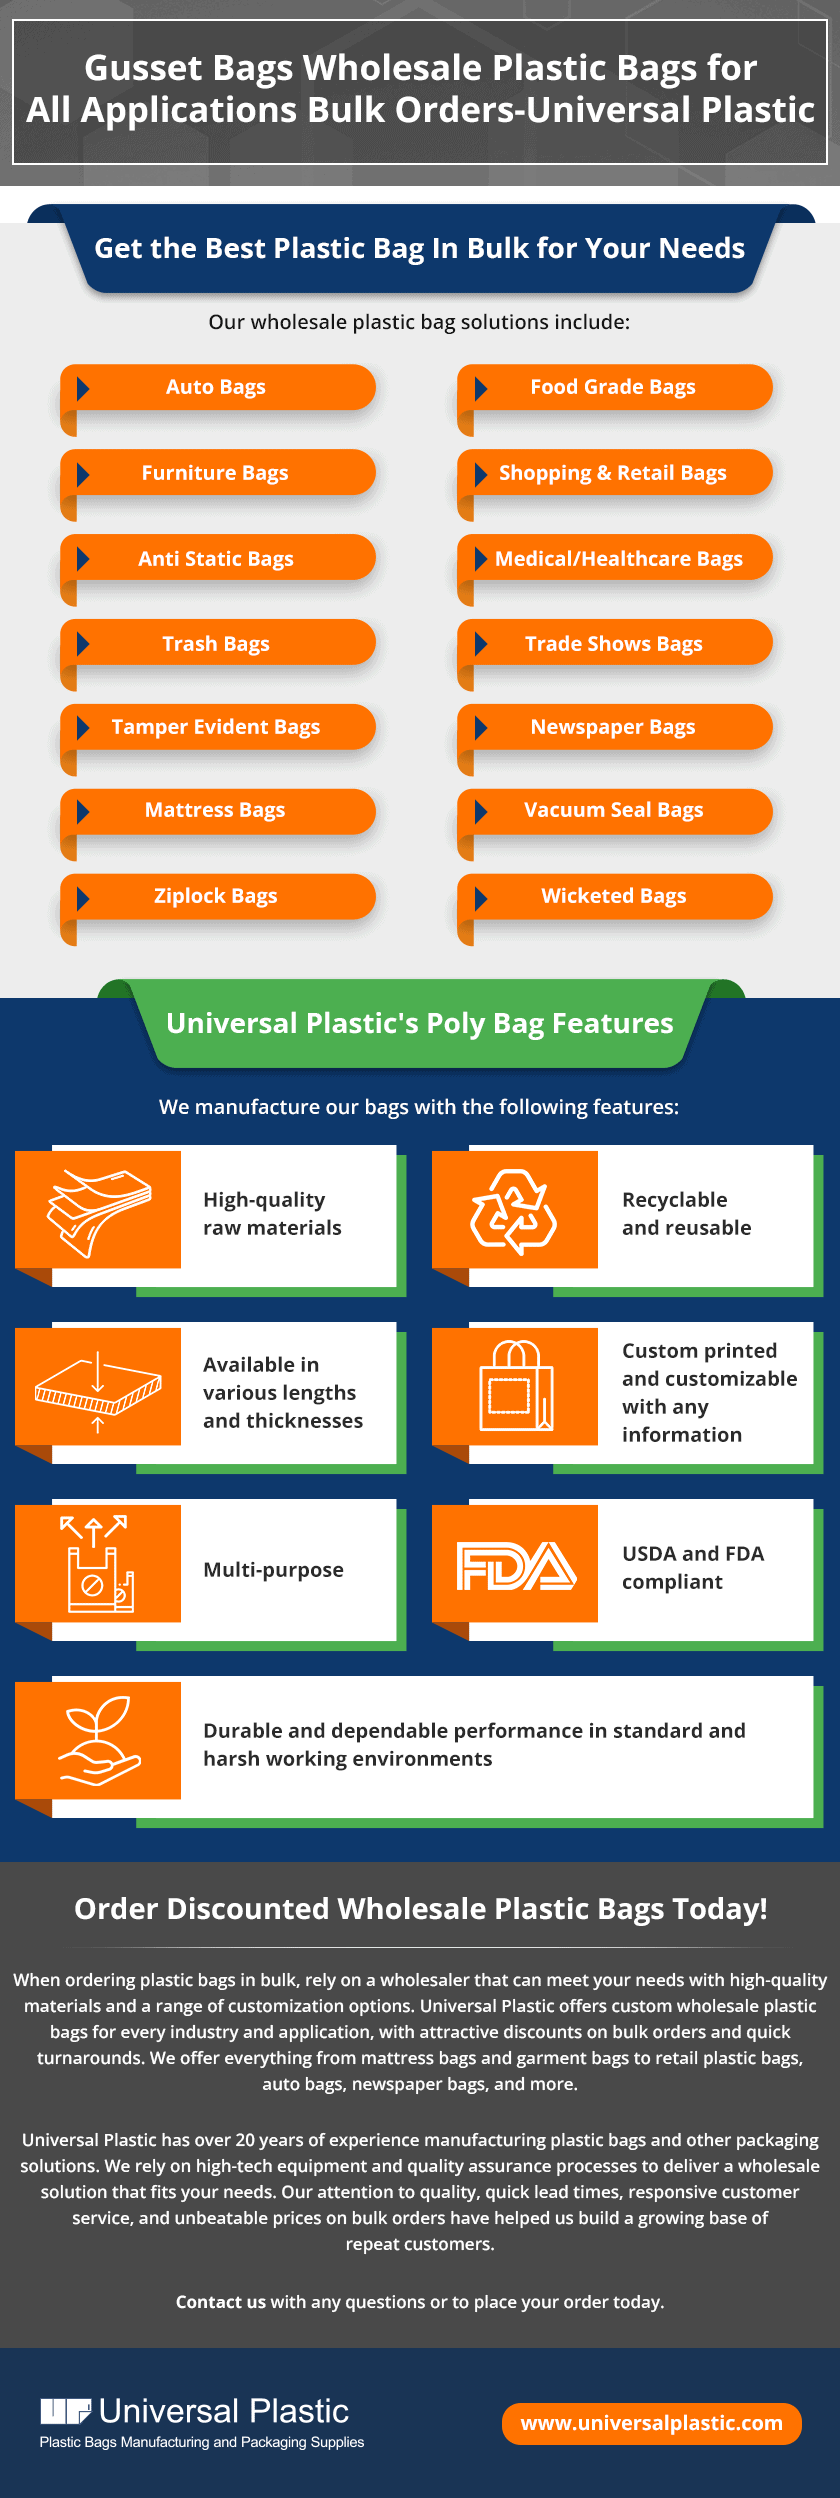 Gusset Bags Wholesale Plastic Bags for All Applications Bulk Orders Universal Plastic